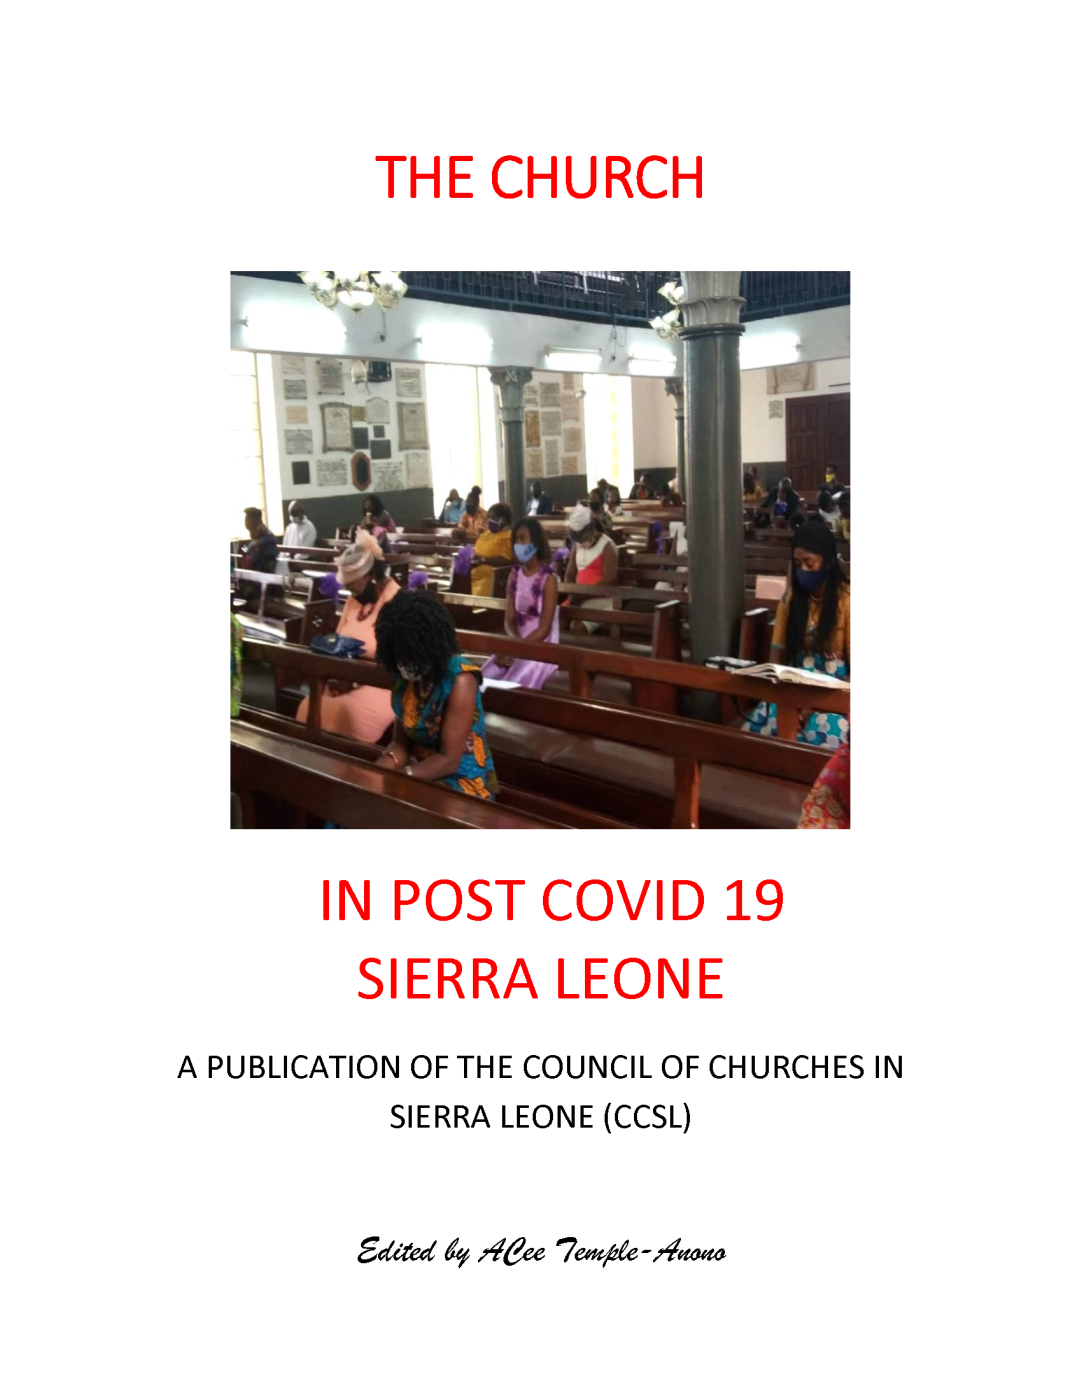 CCSL PUBLICATION THE CHURCH IN POST COVID SIERRA LEONE - COVER